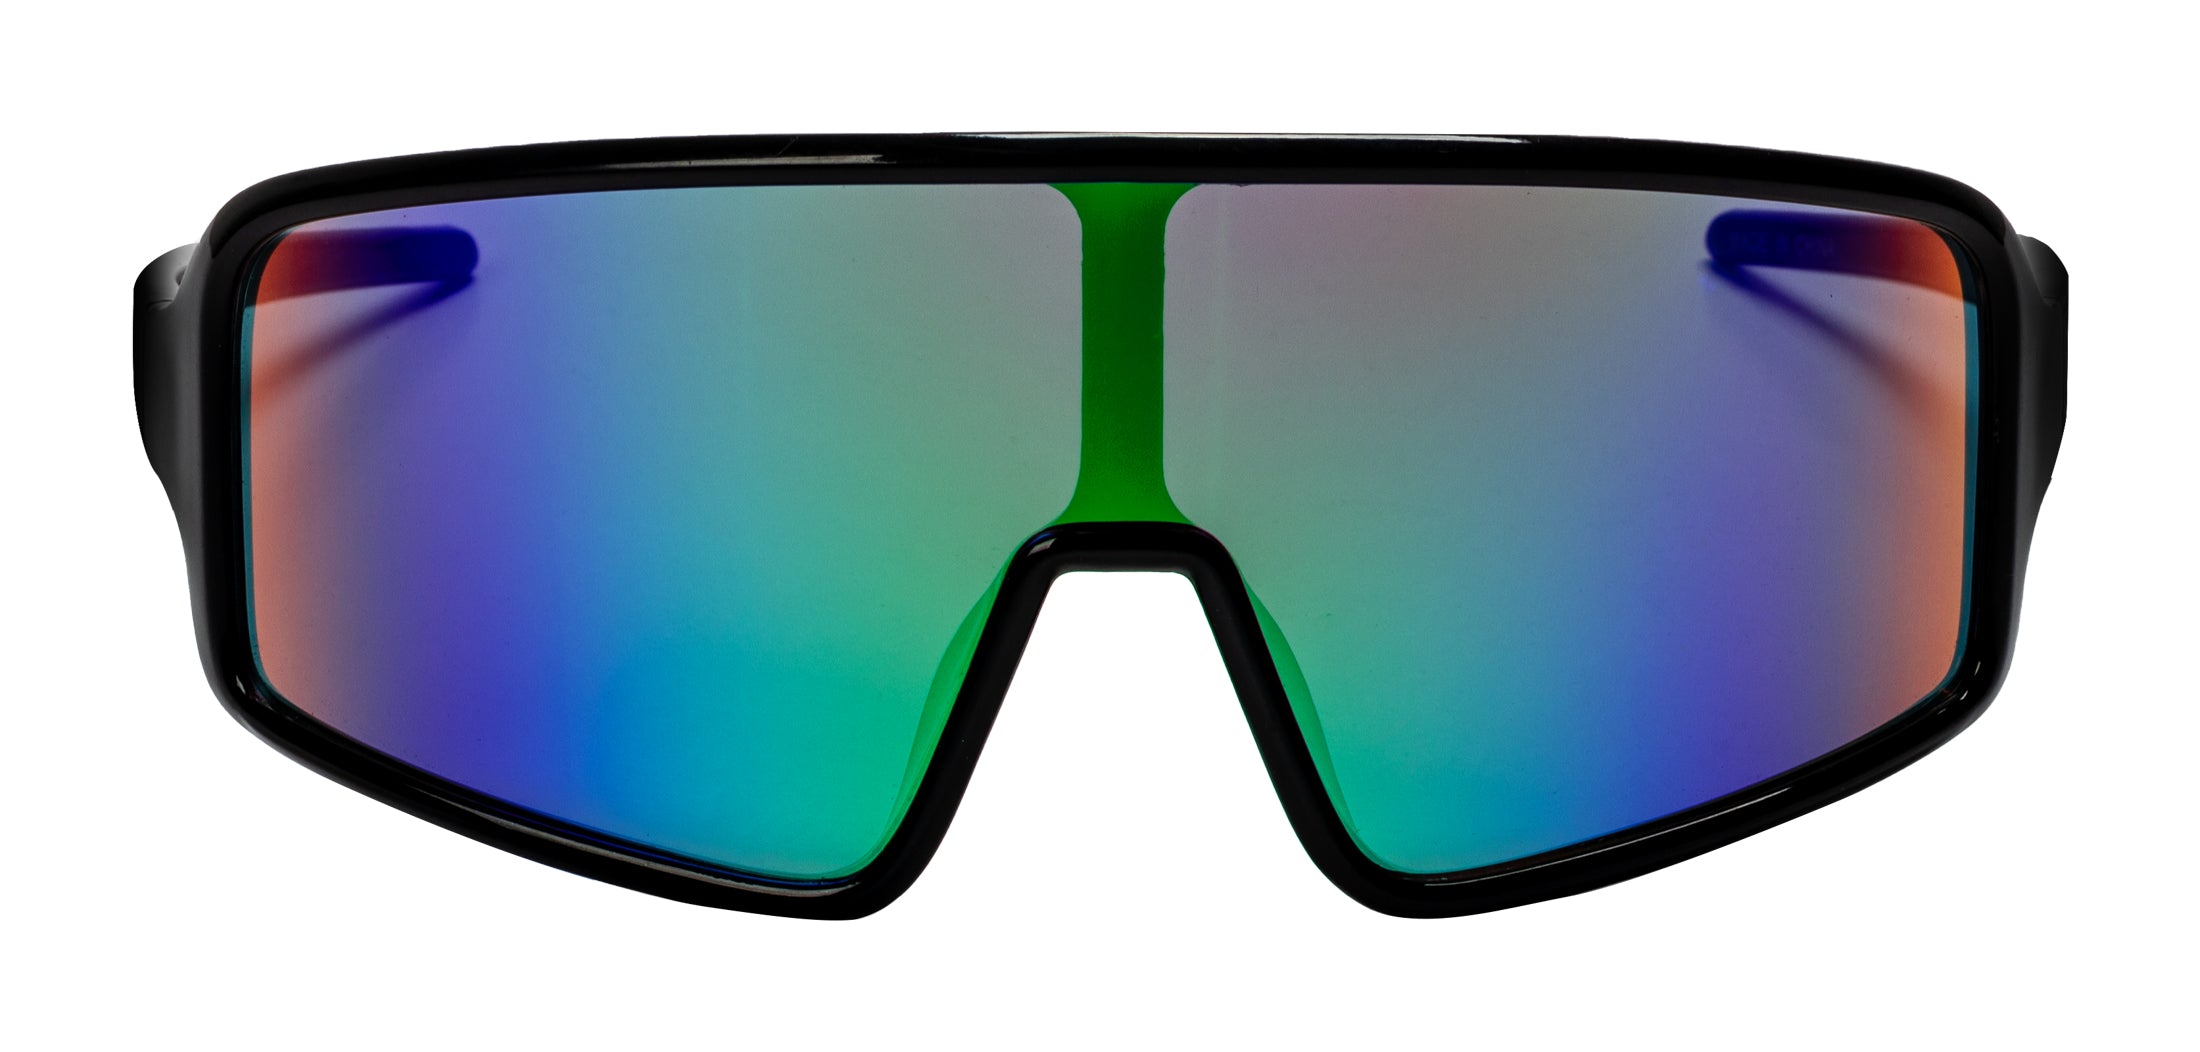 Oversized Shield Wraparound Sports Sunglasses, Black Frame Green/Blue Lens